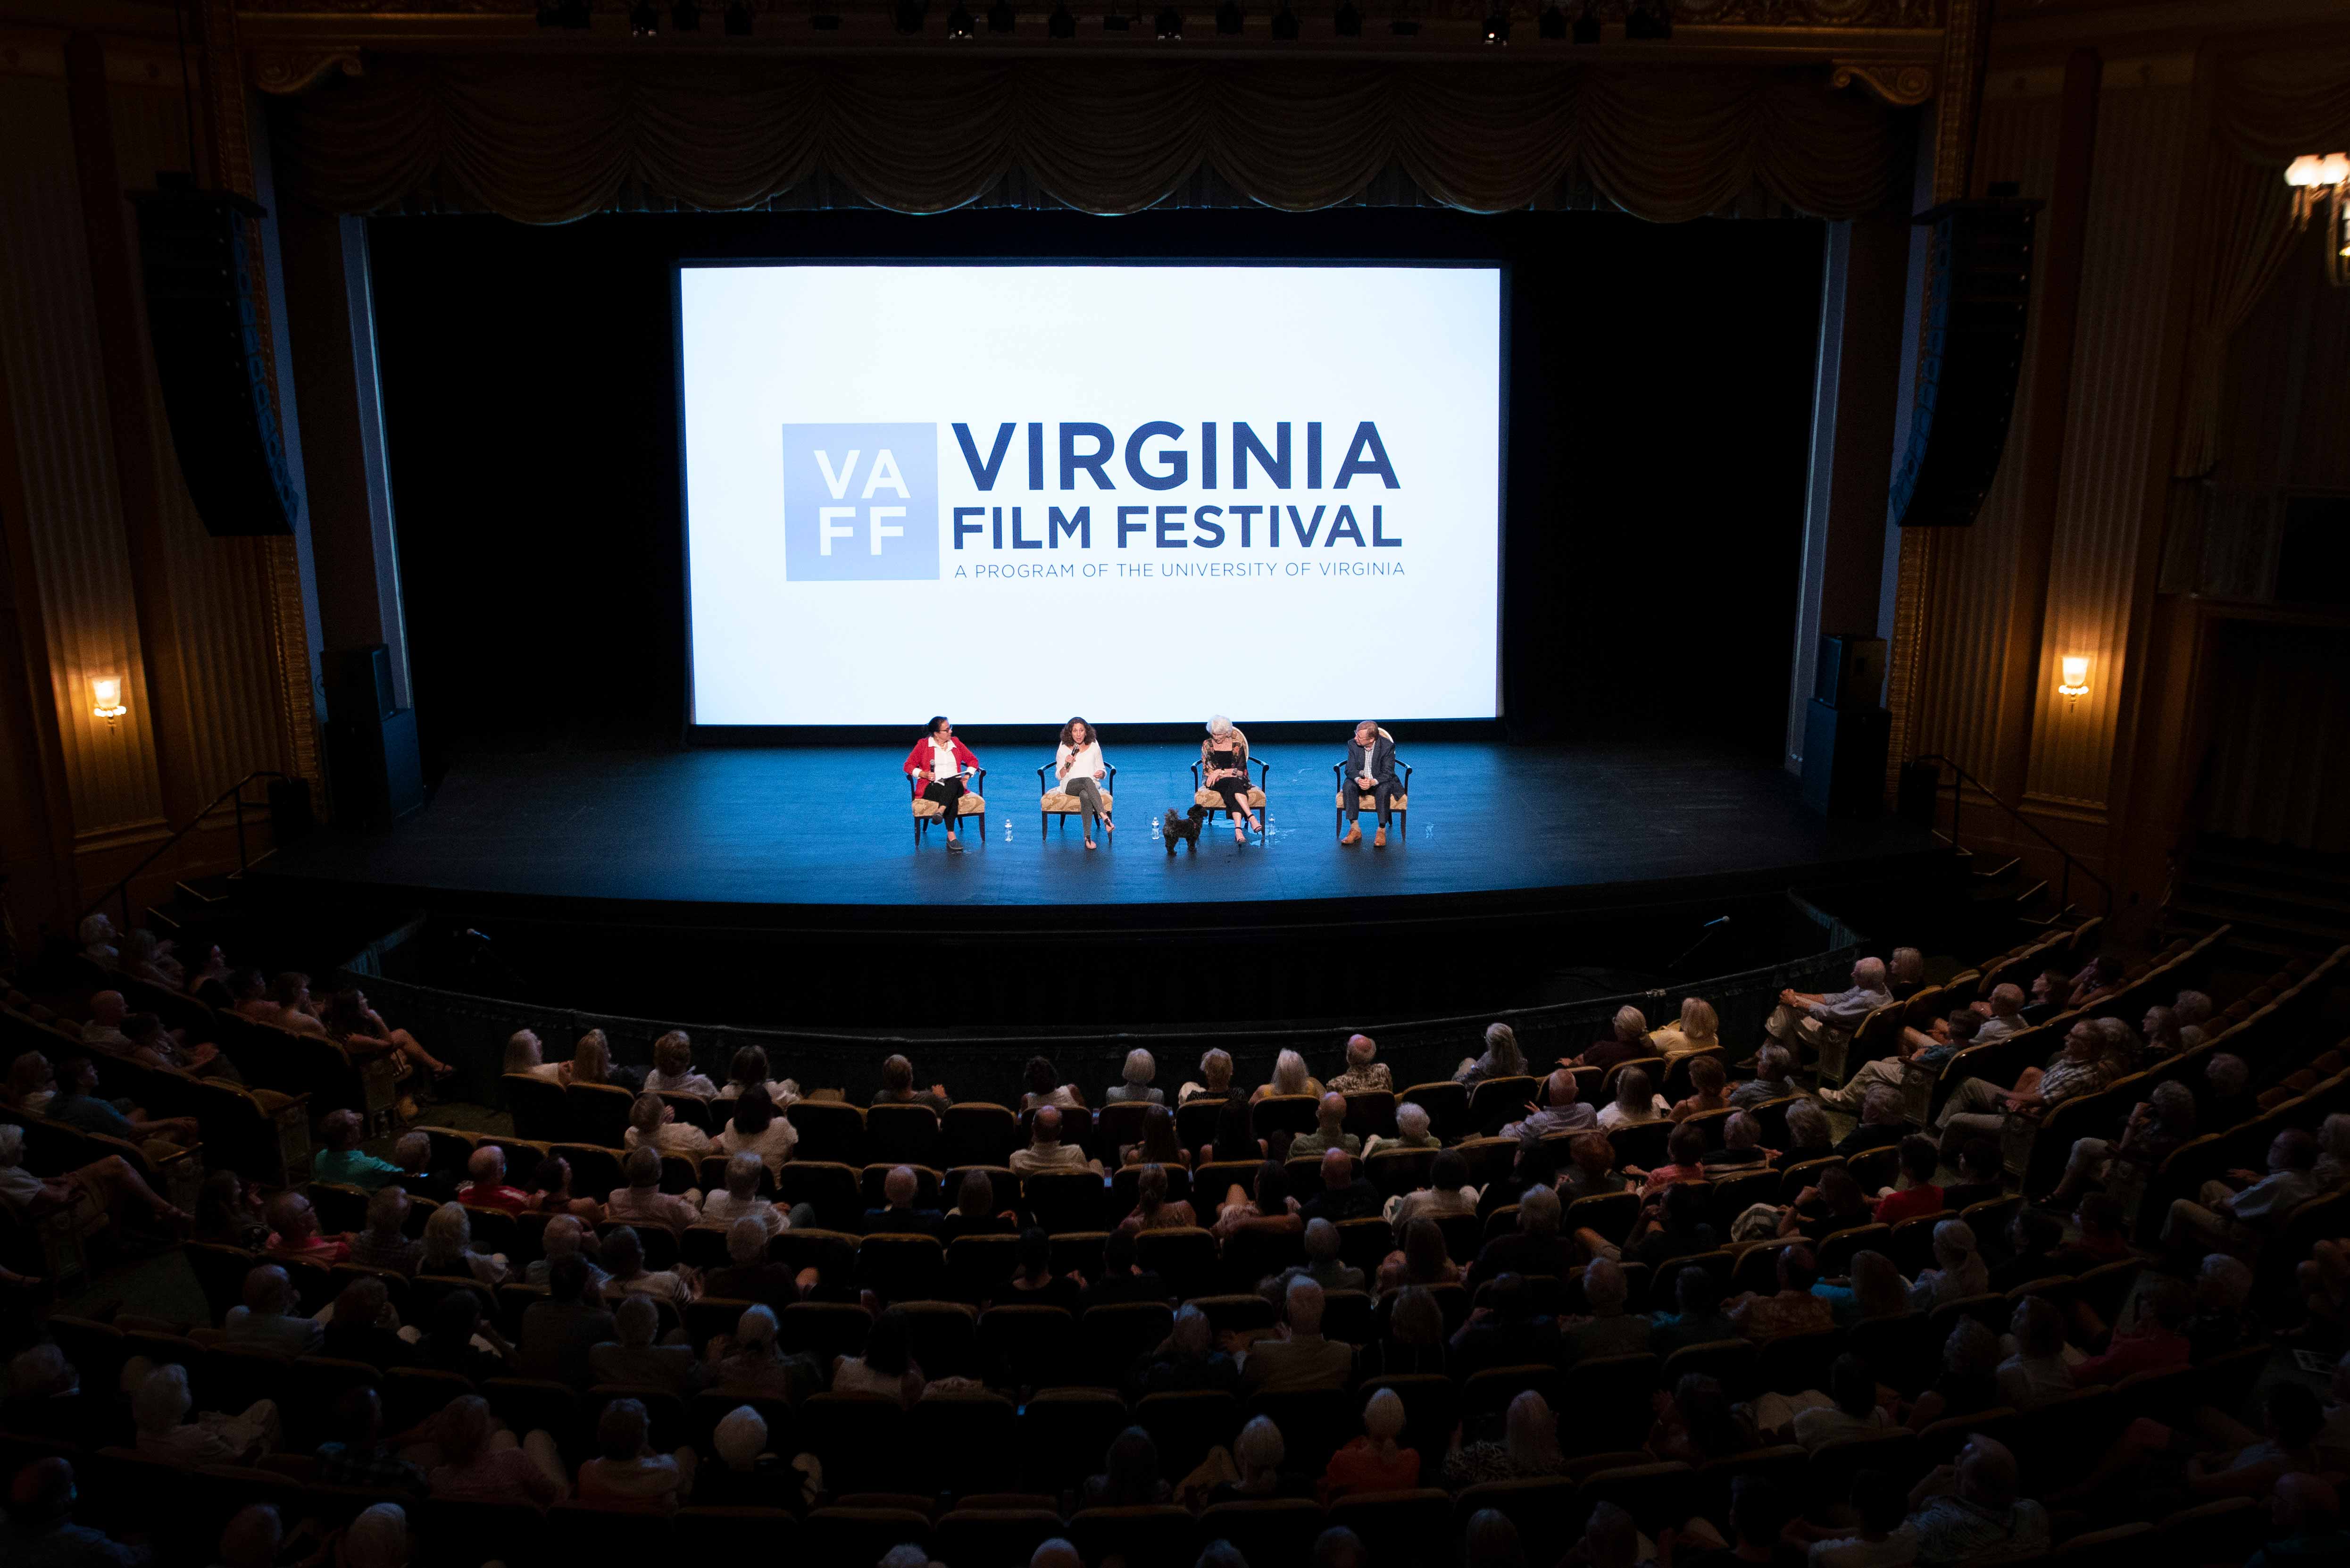 Virginia Film Festival screening at Paramount 